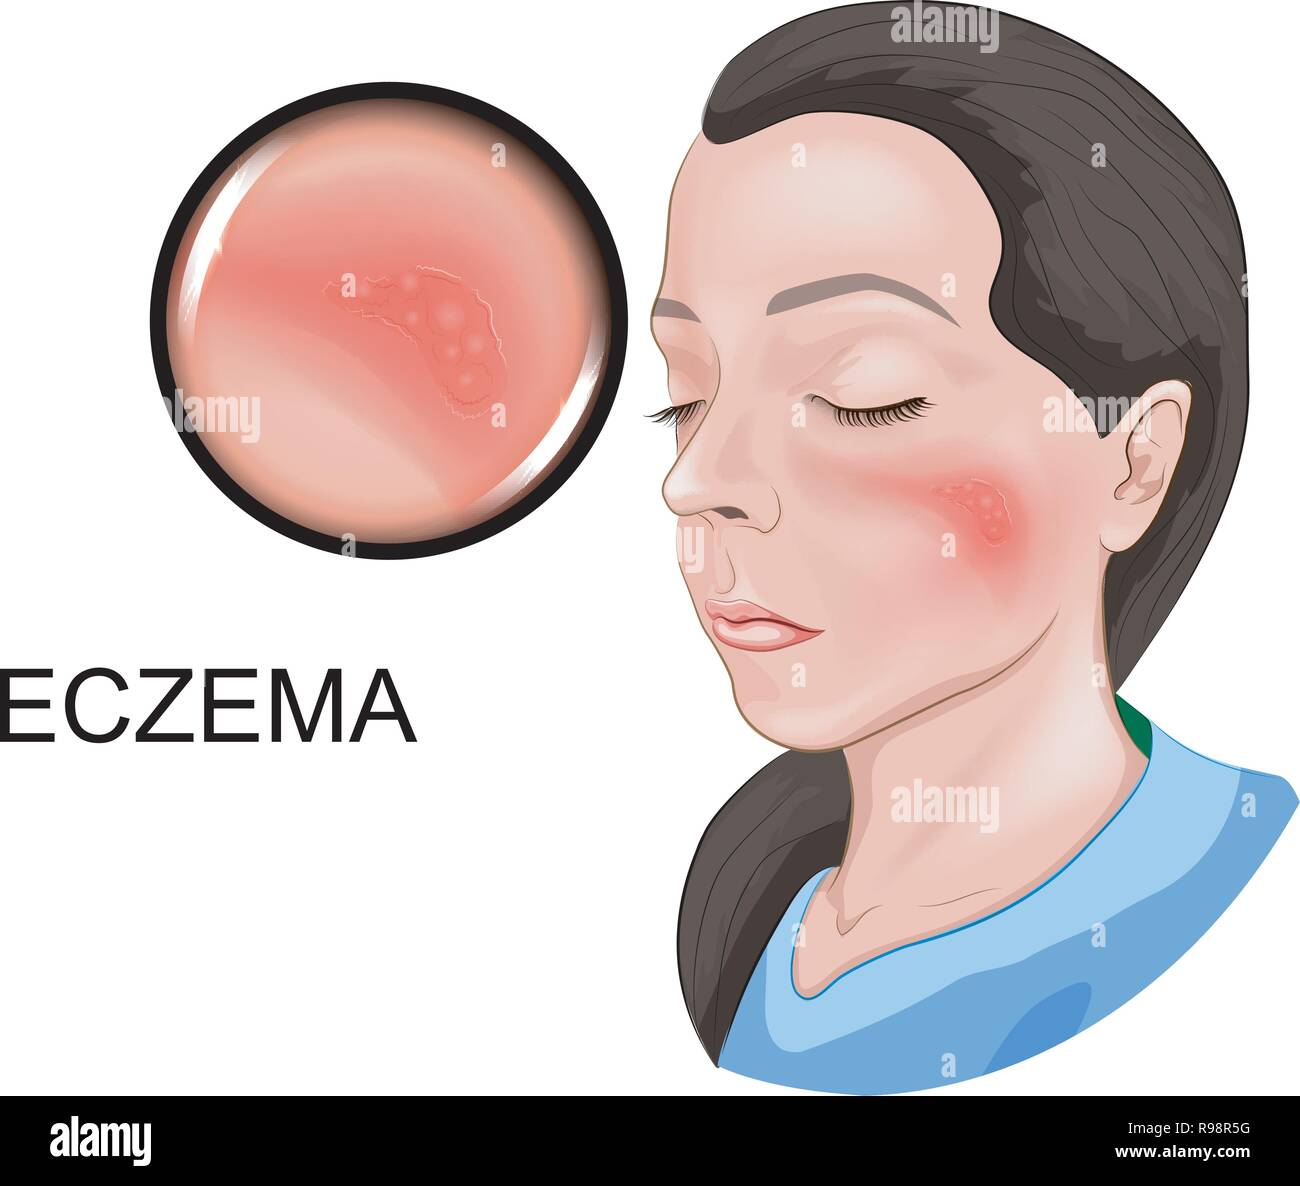 vector illustration of an eczema of a face Stock Vector